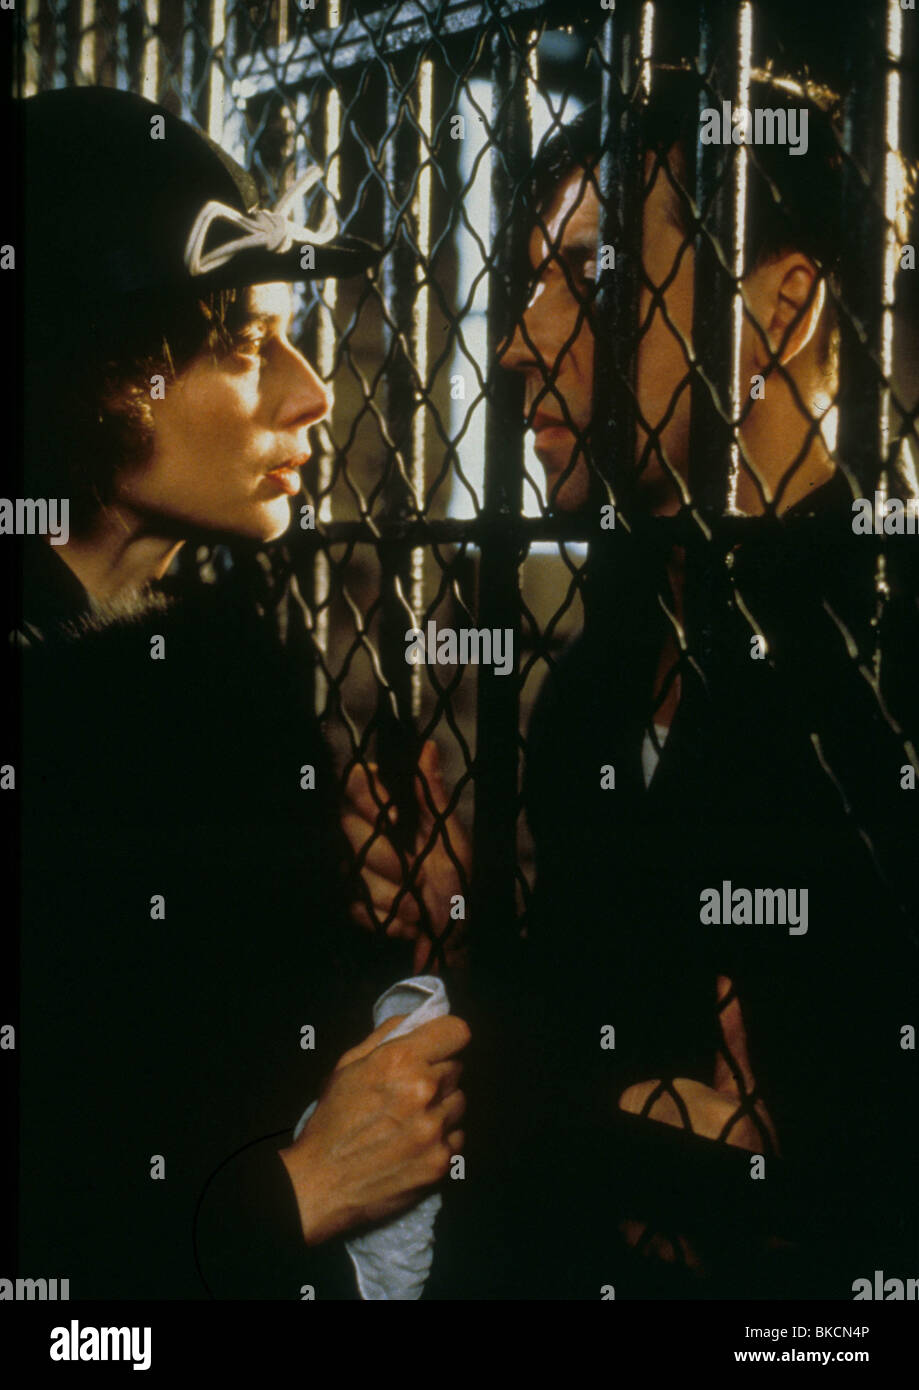 CRIME OF THE CENTURY (TVM) (1996) ISABELLA ROSSELLINI, STEPHEN REA CTC 004 Stock Photo